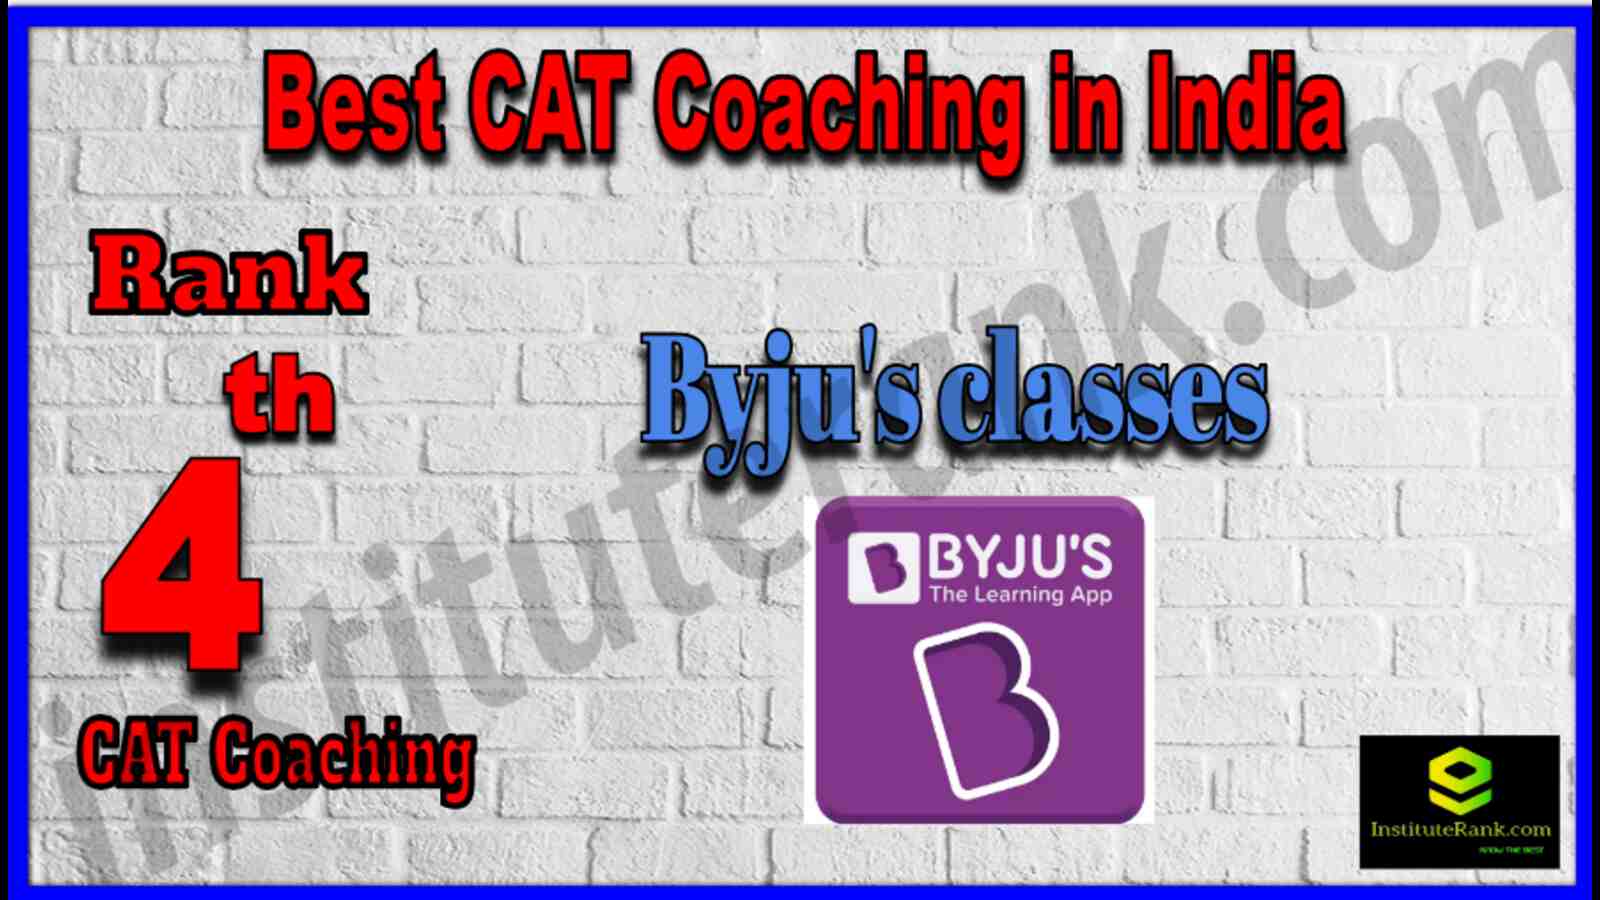 Rank 4 Best CAT Coaching in India